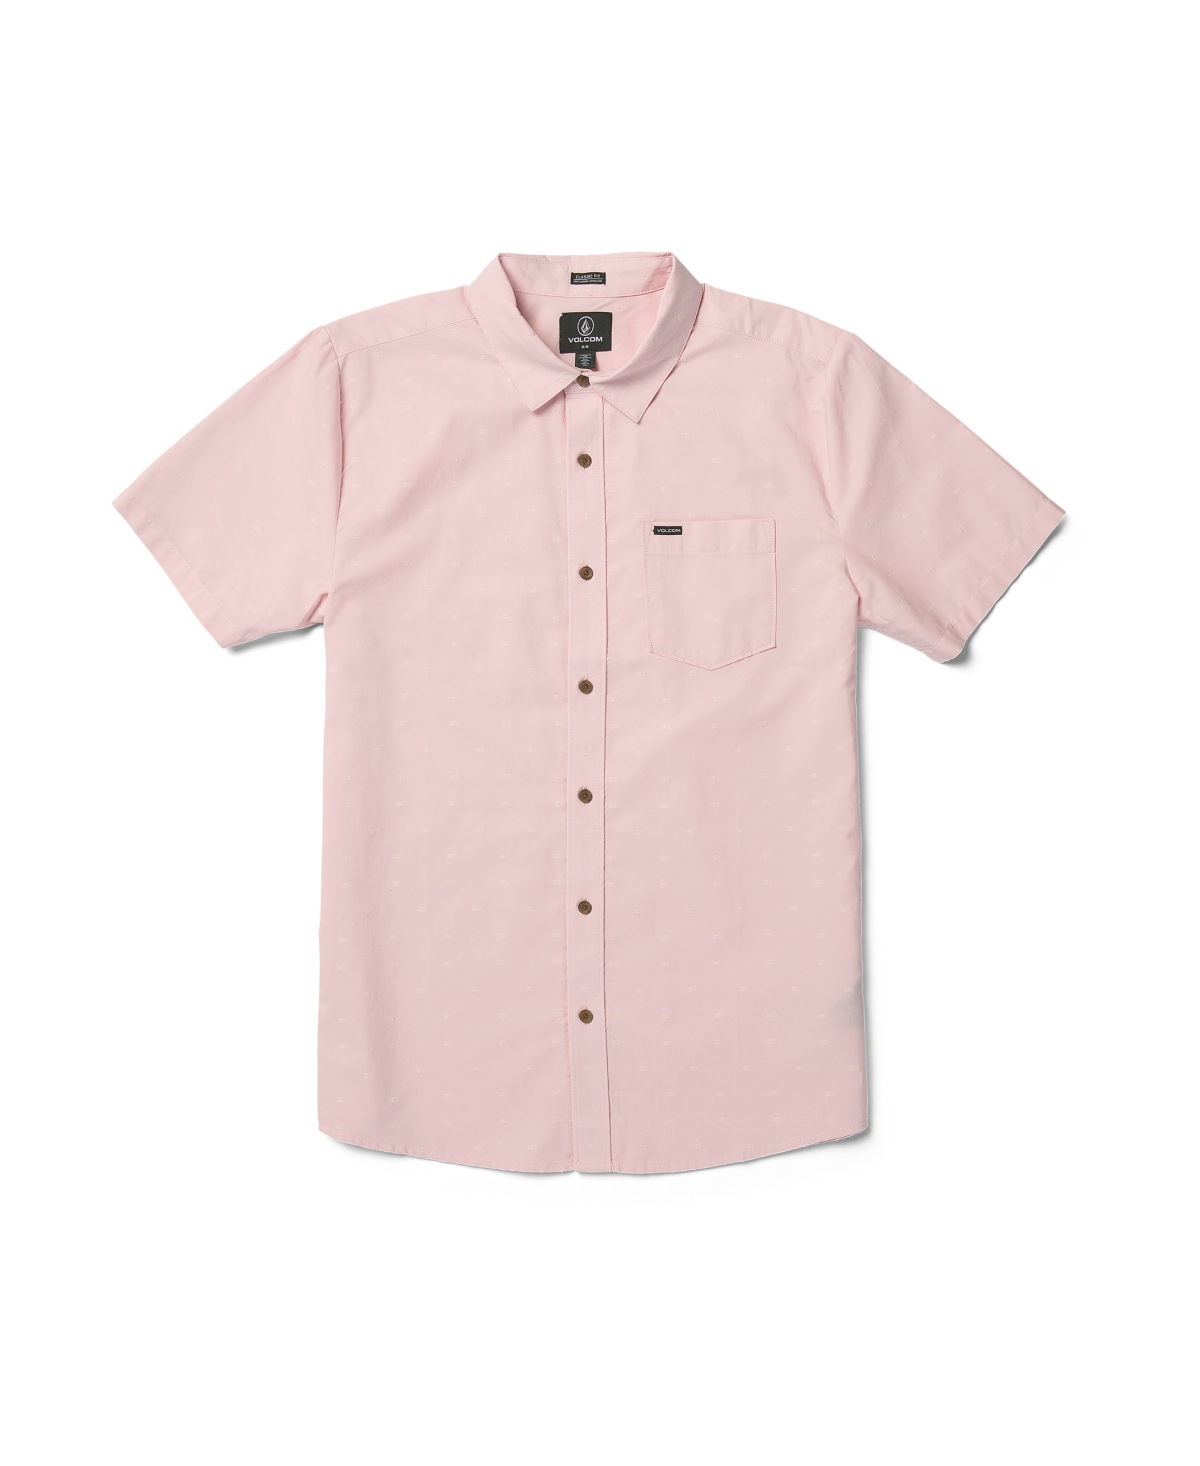 Men's Crownstone Short Sleeve Shirt - Lilac Ash